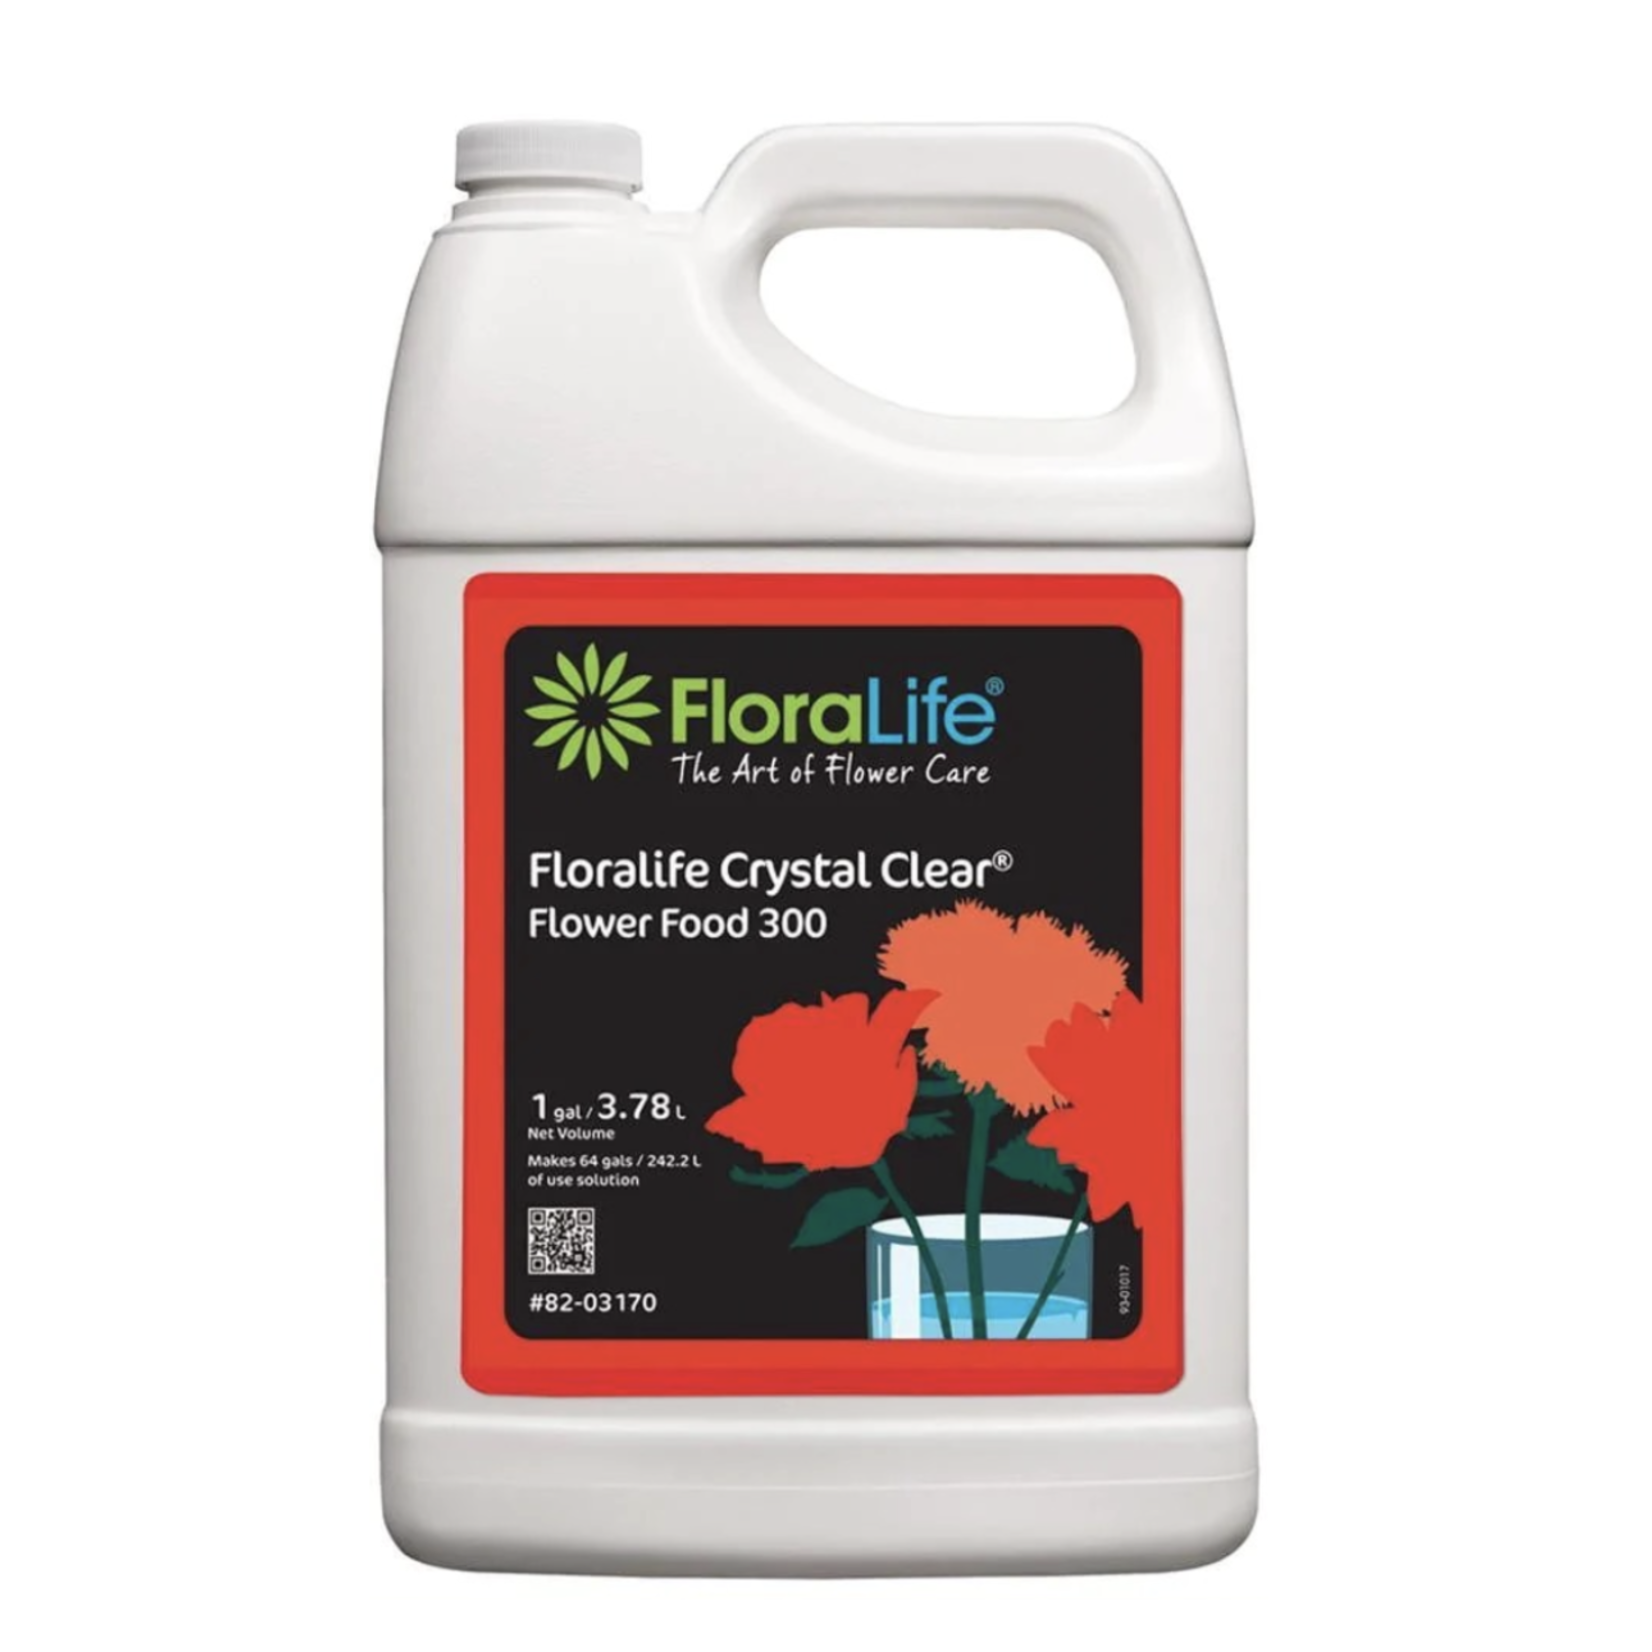 Floralife CRYSTAL CLEAR Flower Food 300 Liquid, 1 gal